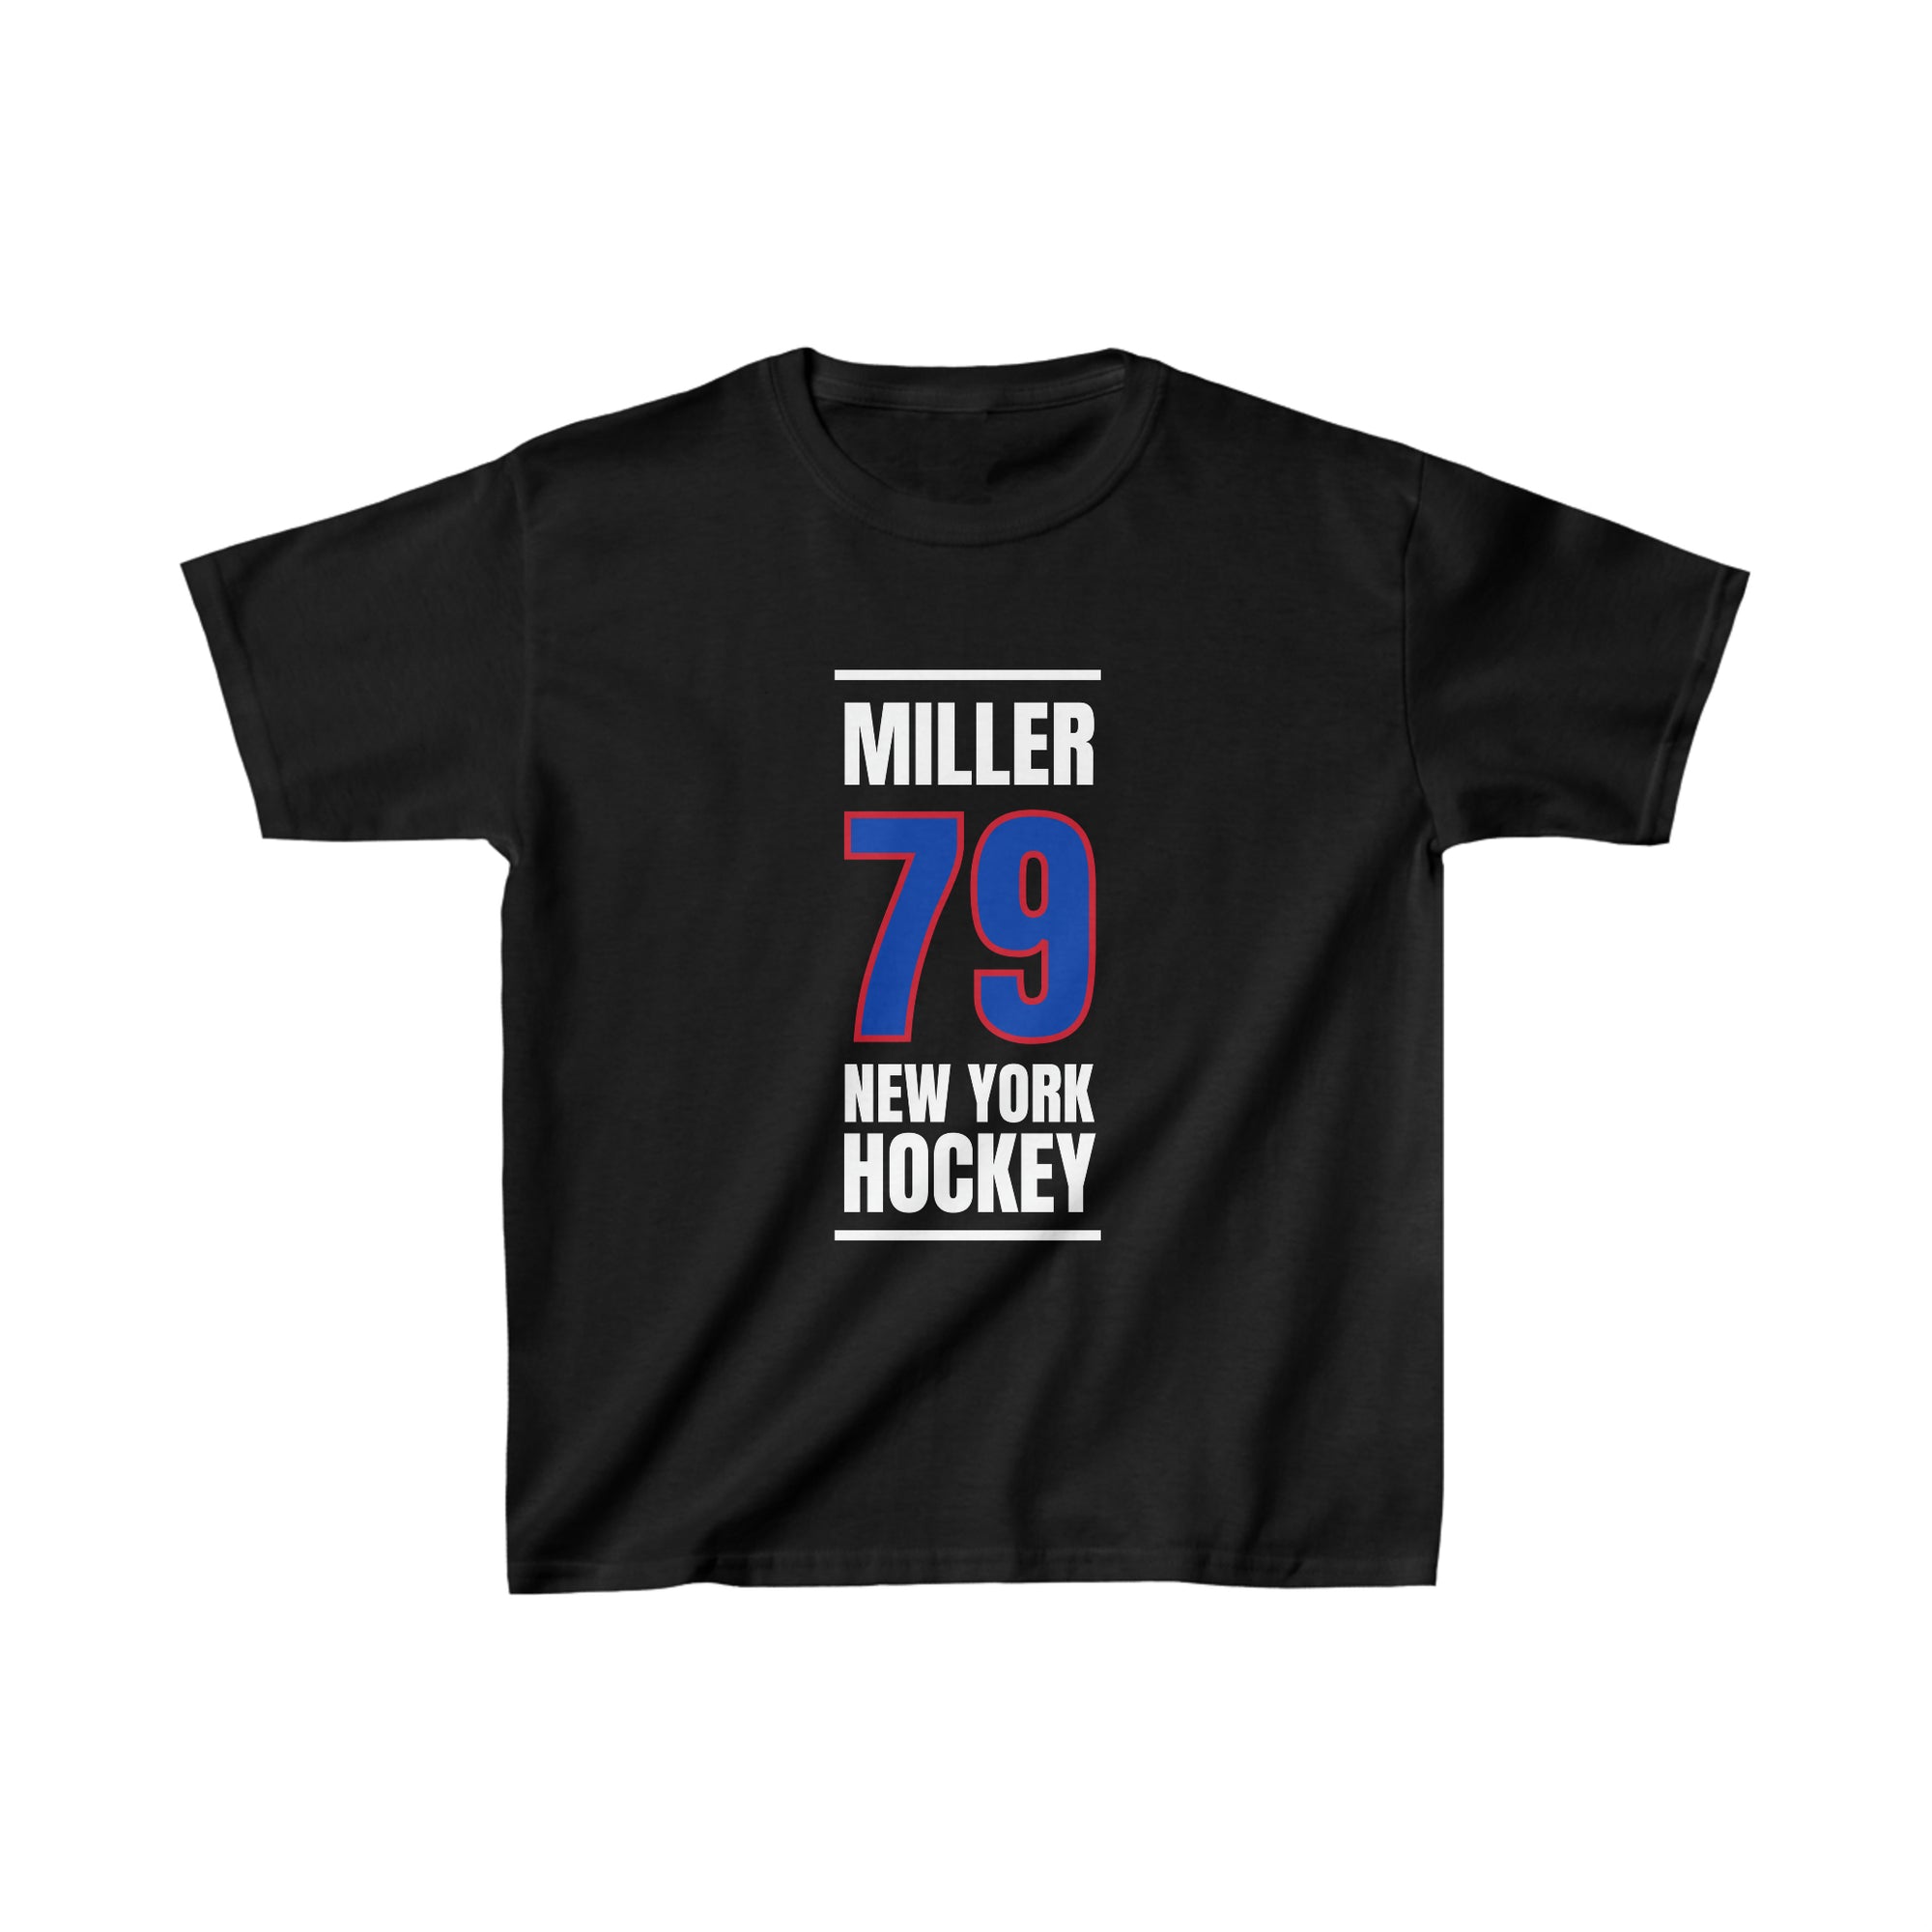 Miller 79 New York Hockey Royal Blue Vertical Design Kids Tee